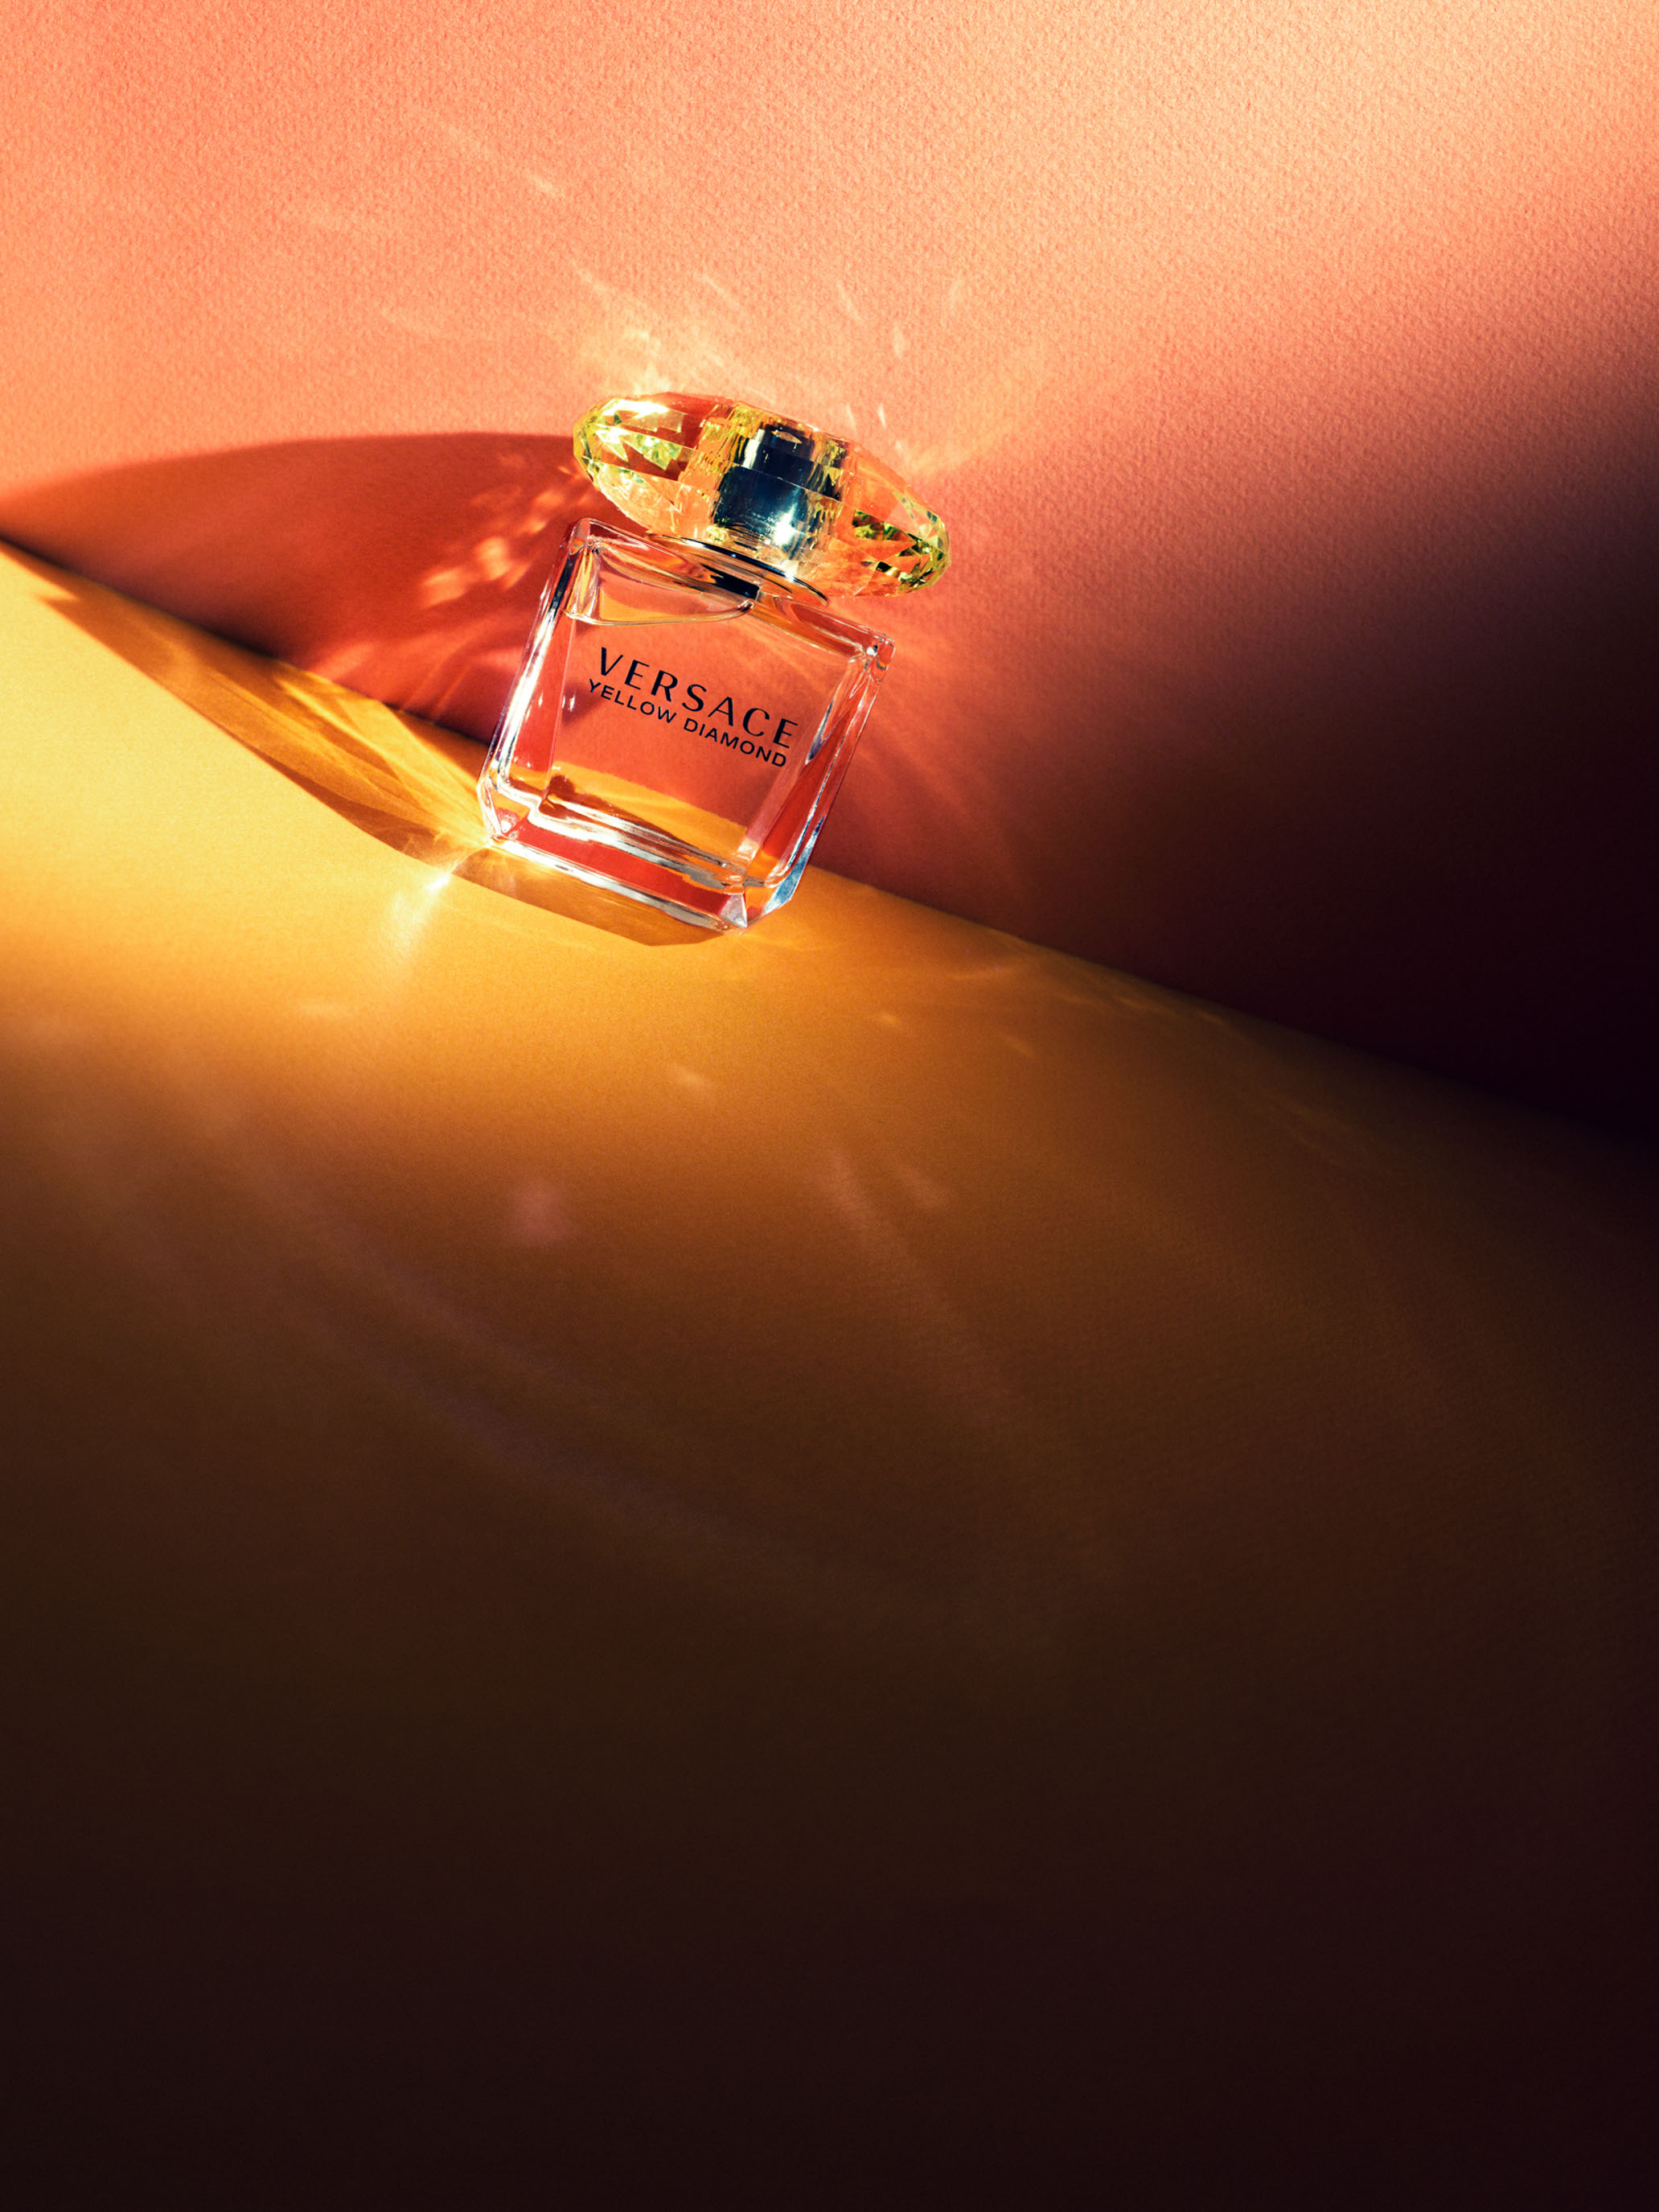 STAN Versace Yellow Diamond Fragrance Still Life